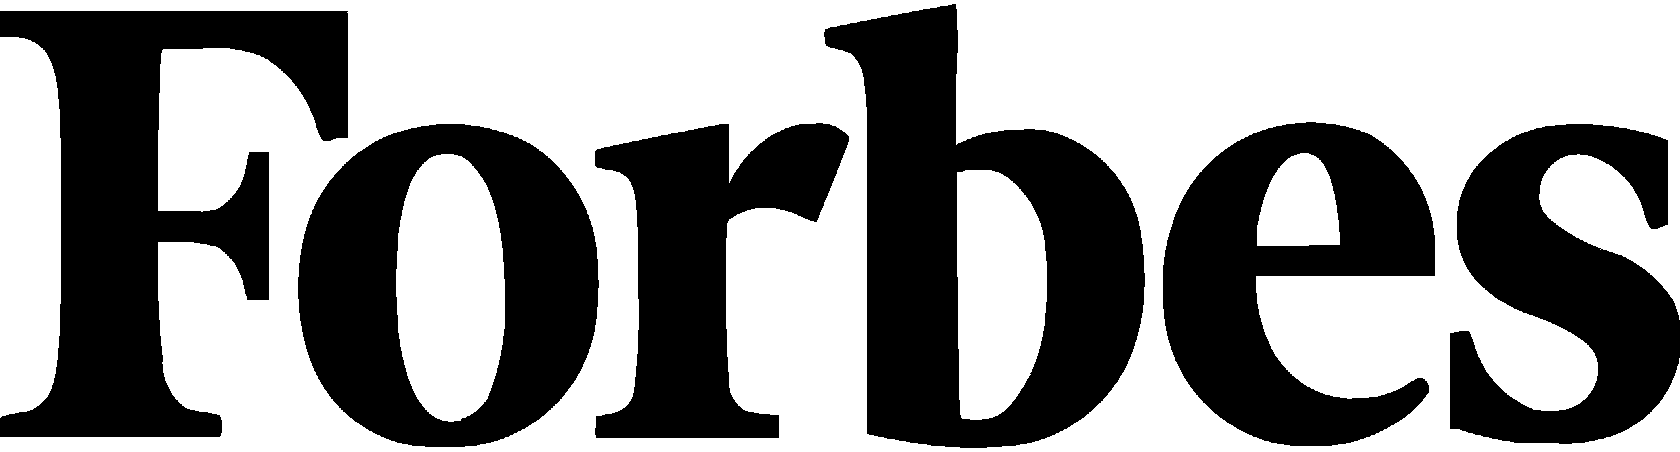 логотип форбс forbes